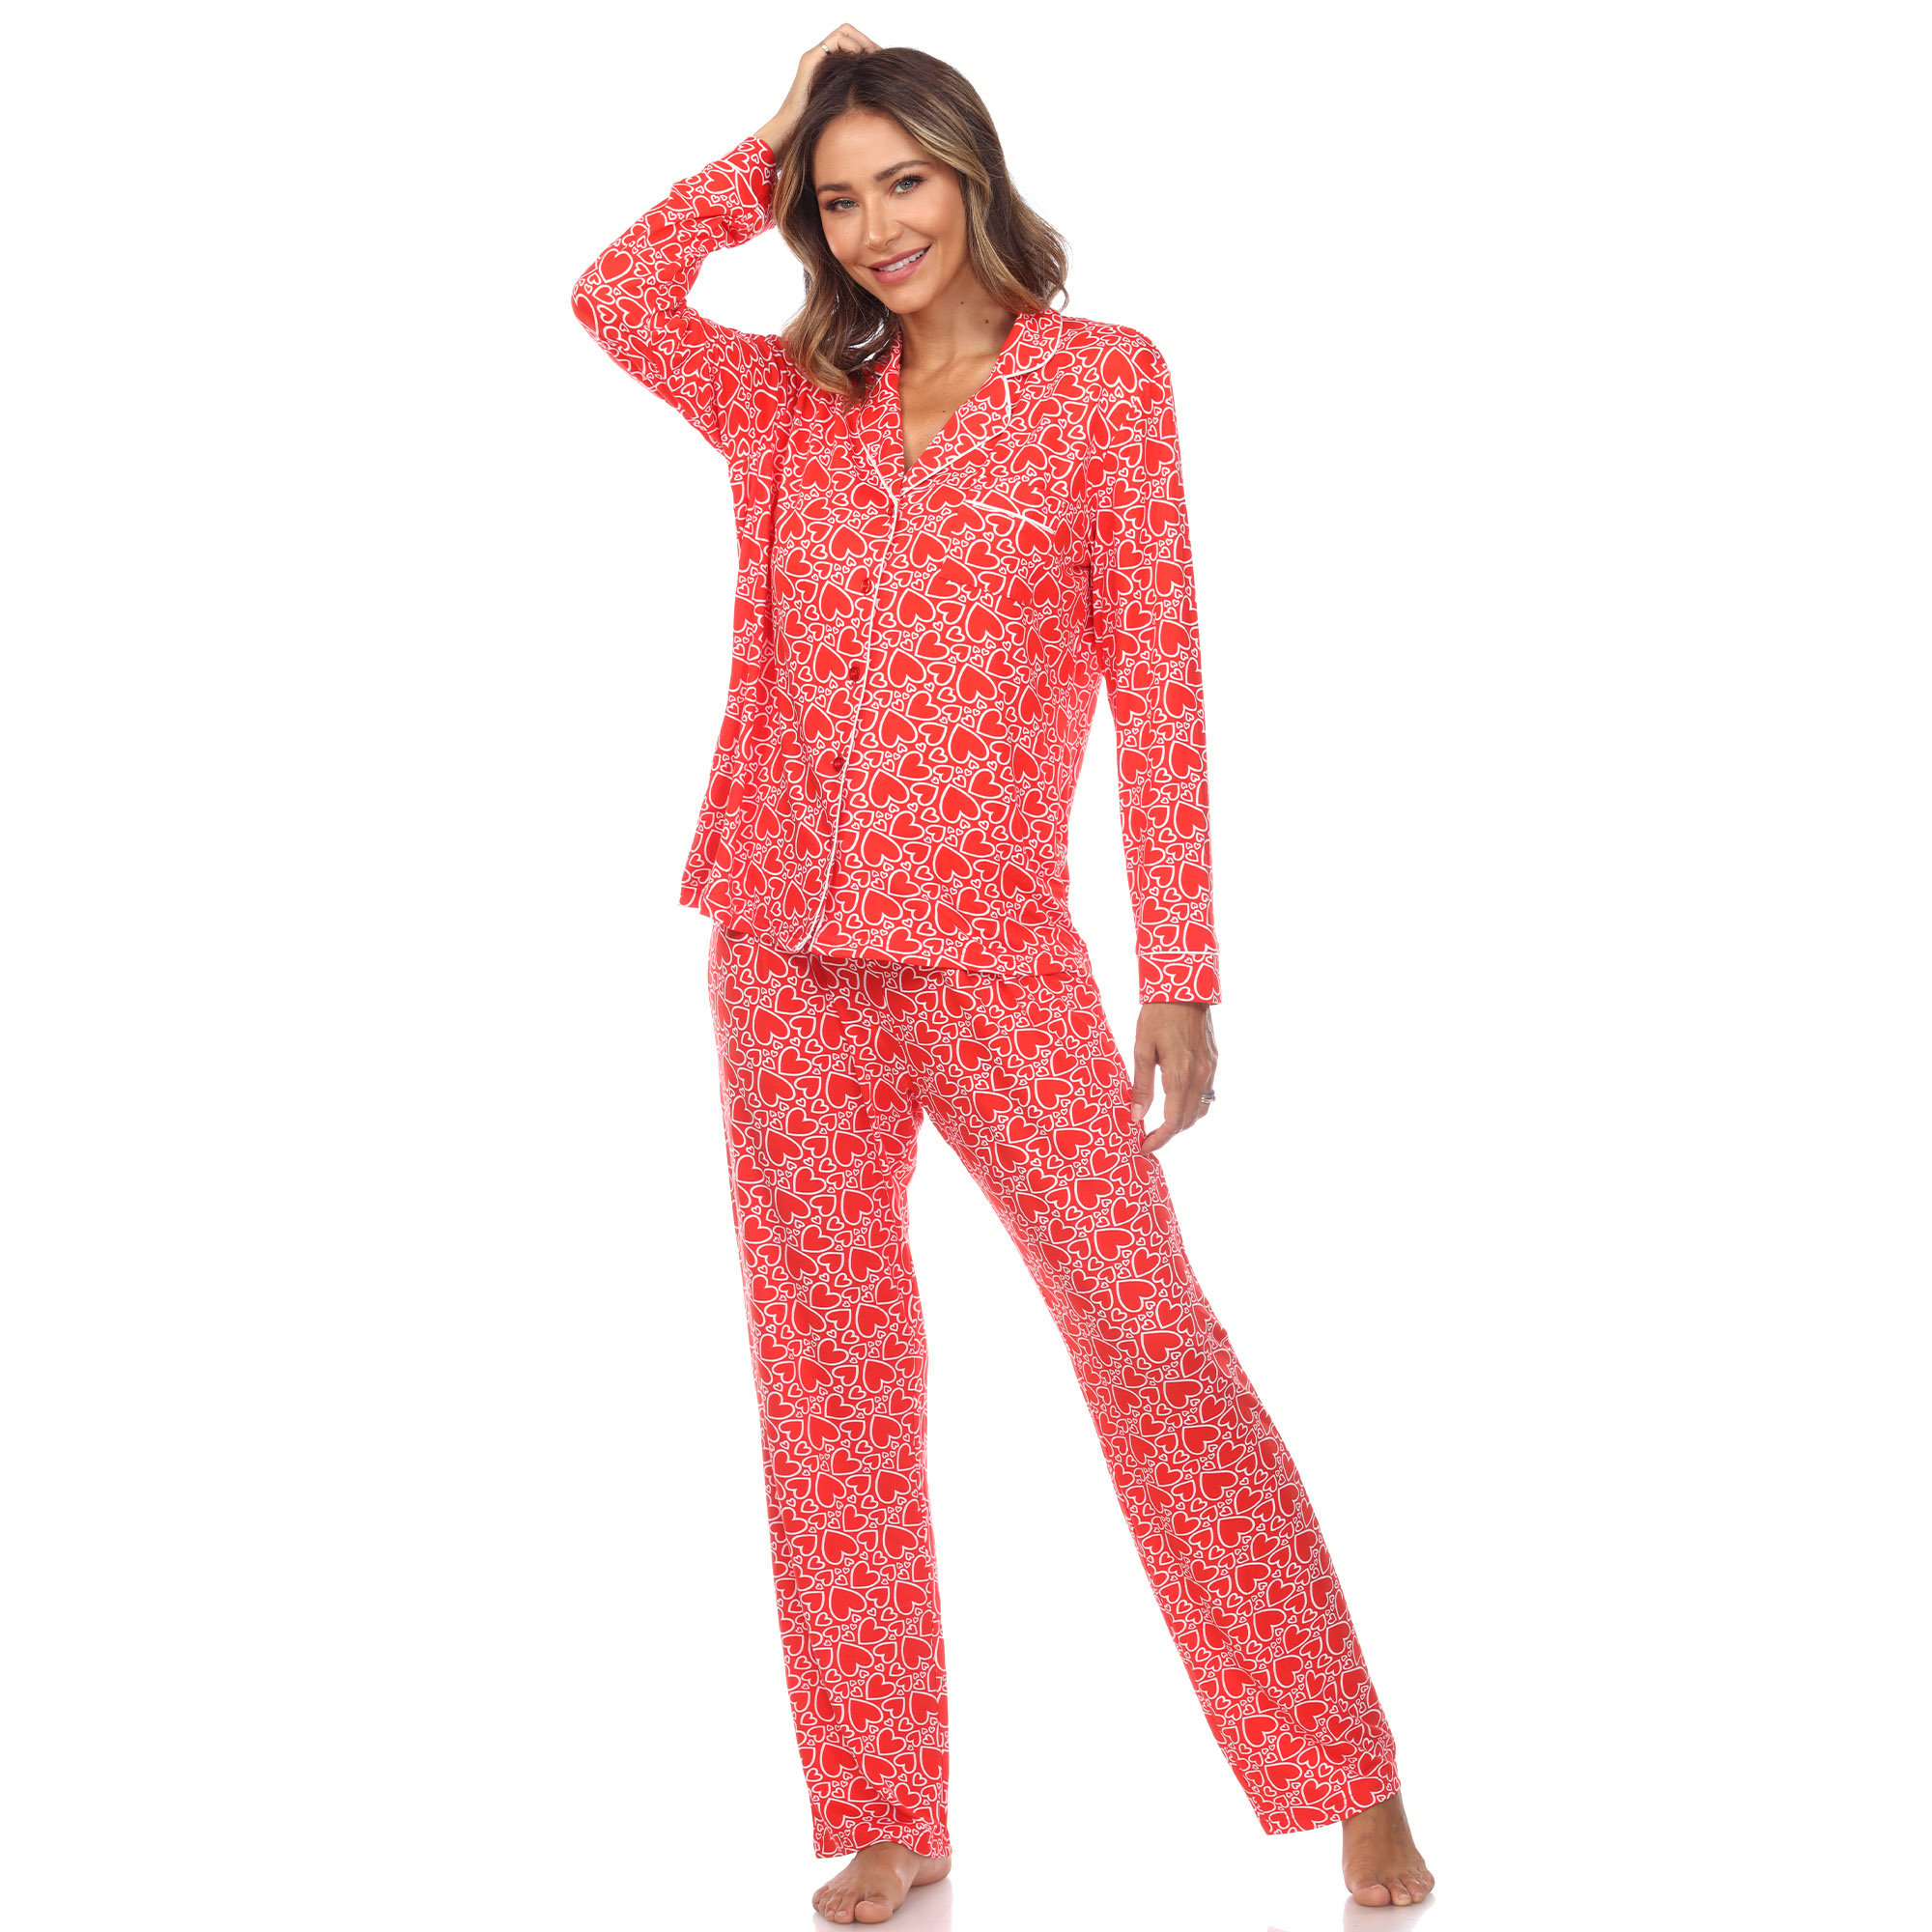 White Mark Women's Long Sleeve Hearts Pajama Set - Red, Medium